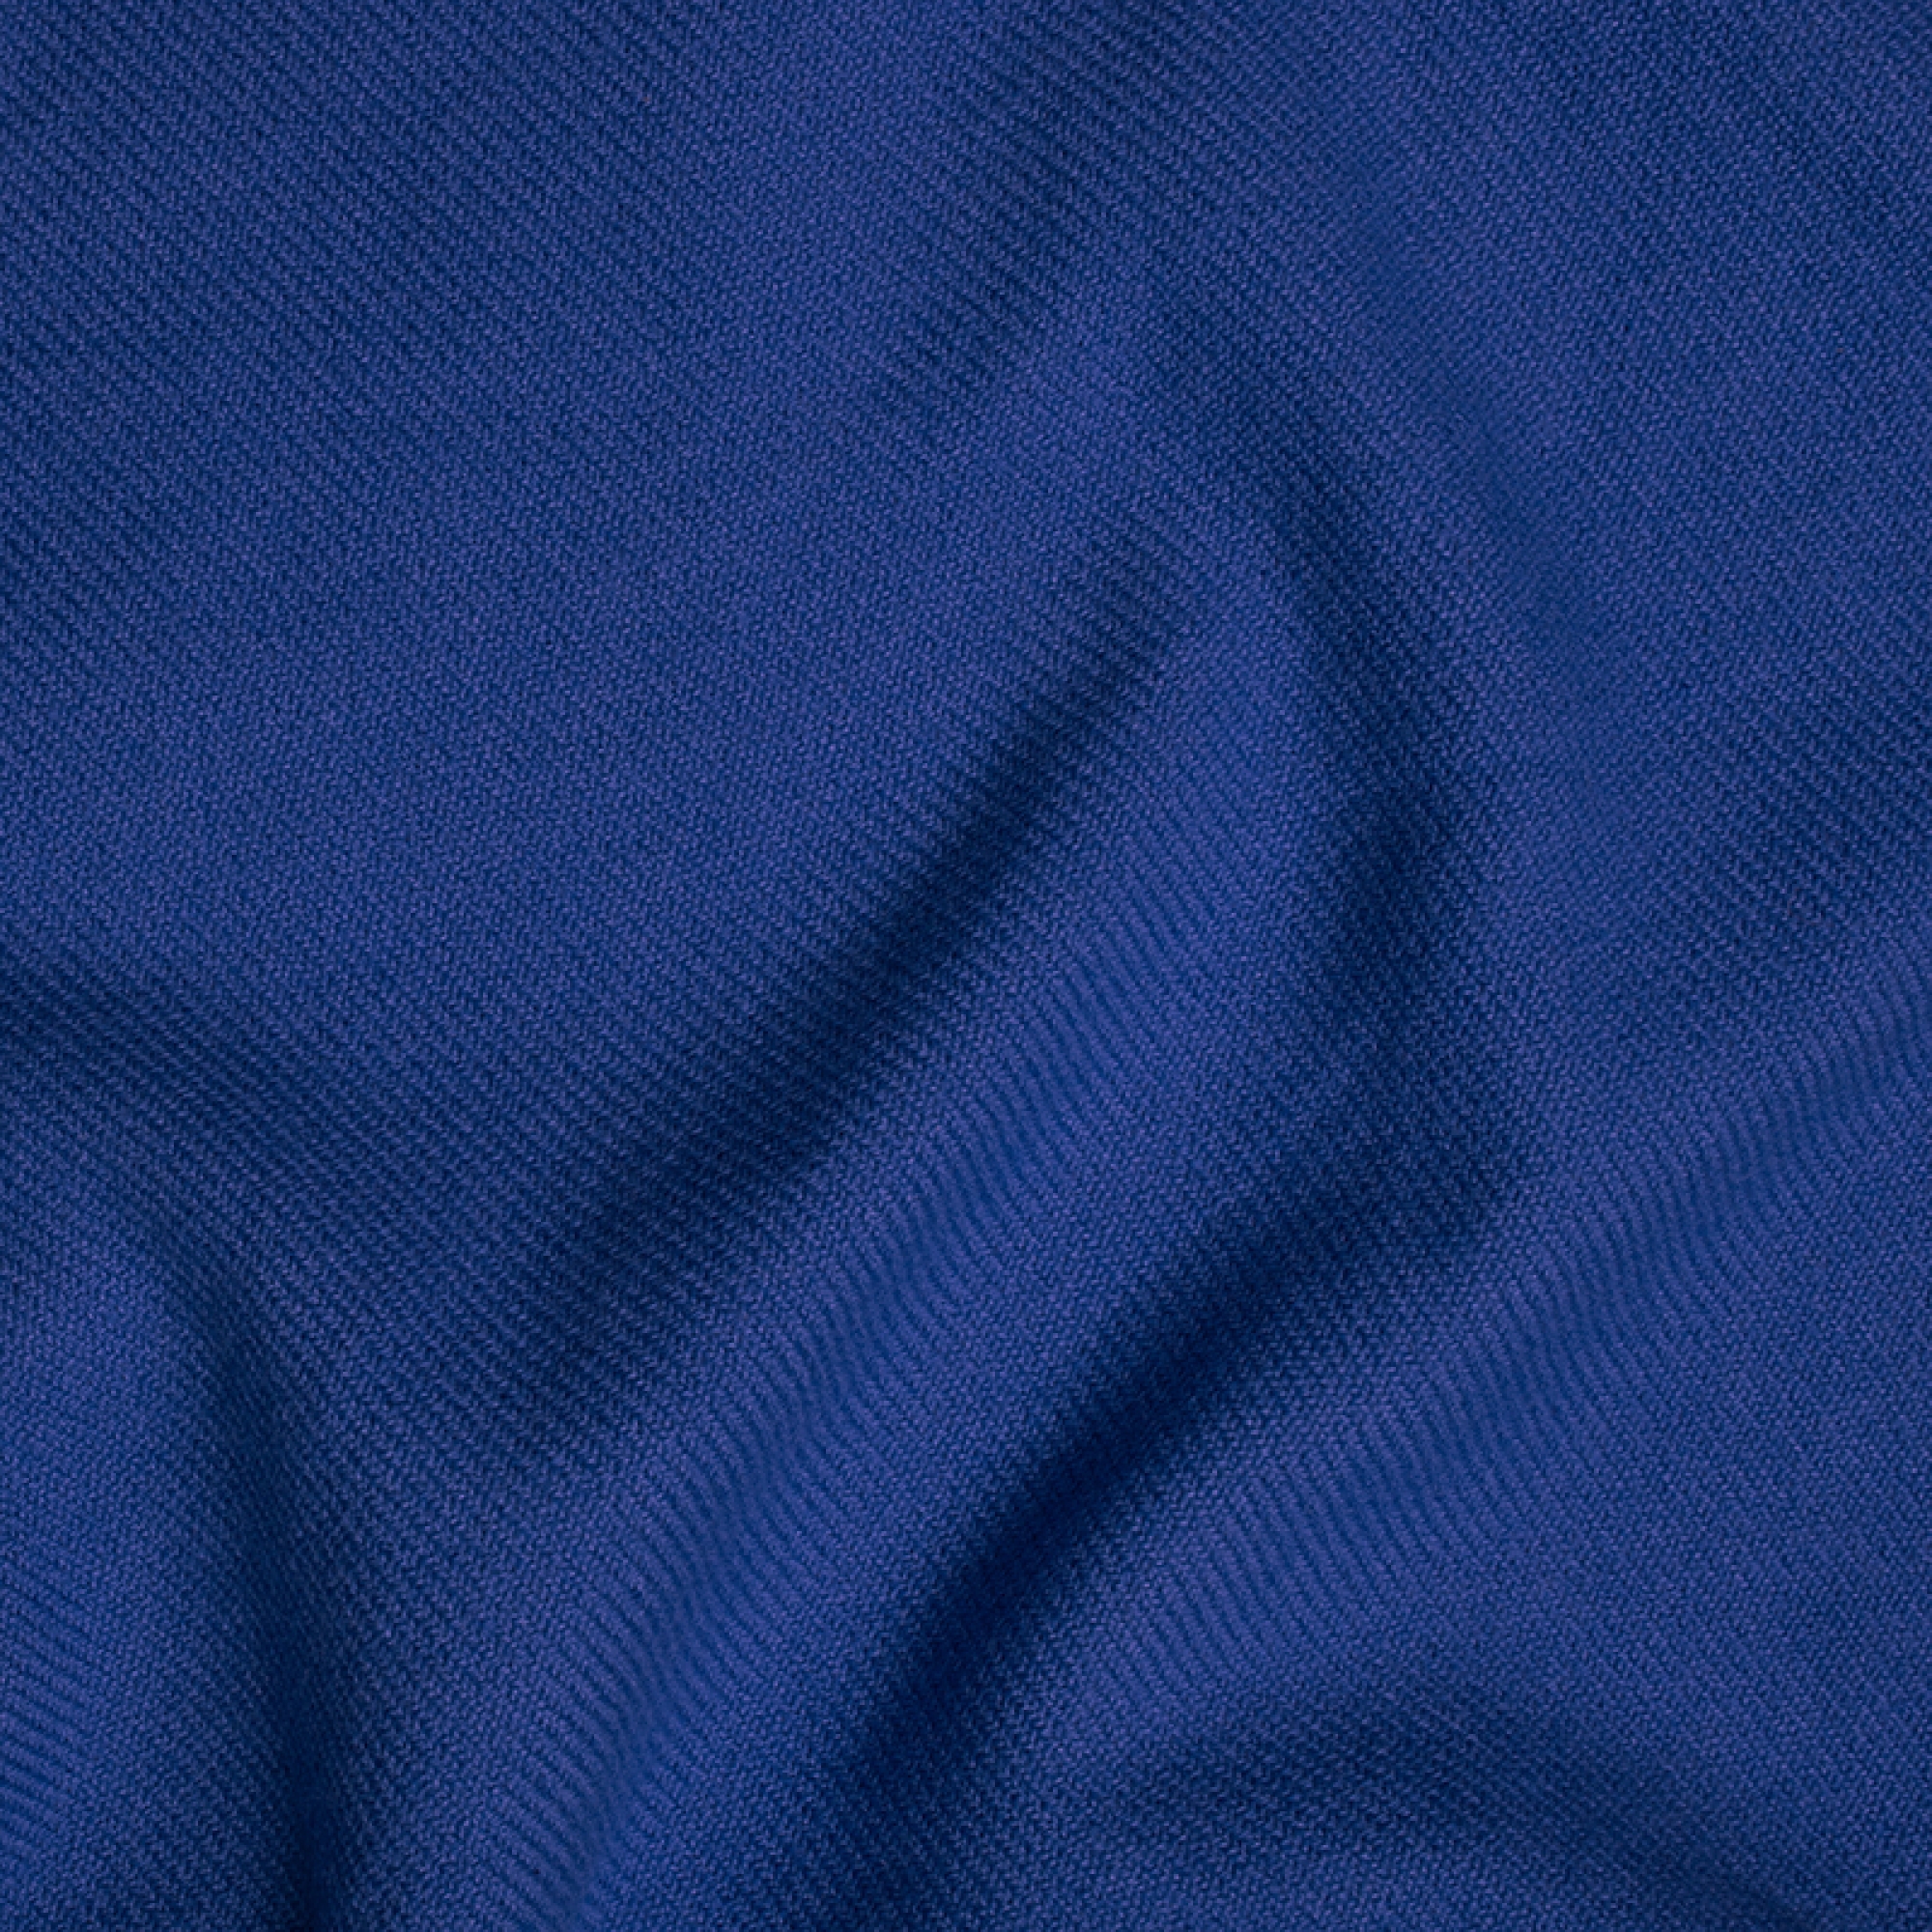 Cashmere accessories blanket toodoo plain s 140 x 200 light cobalt blue 140 x 200 cm